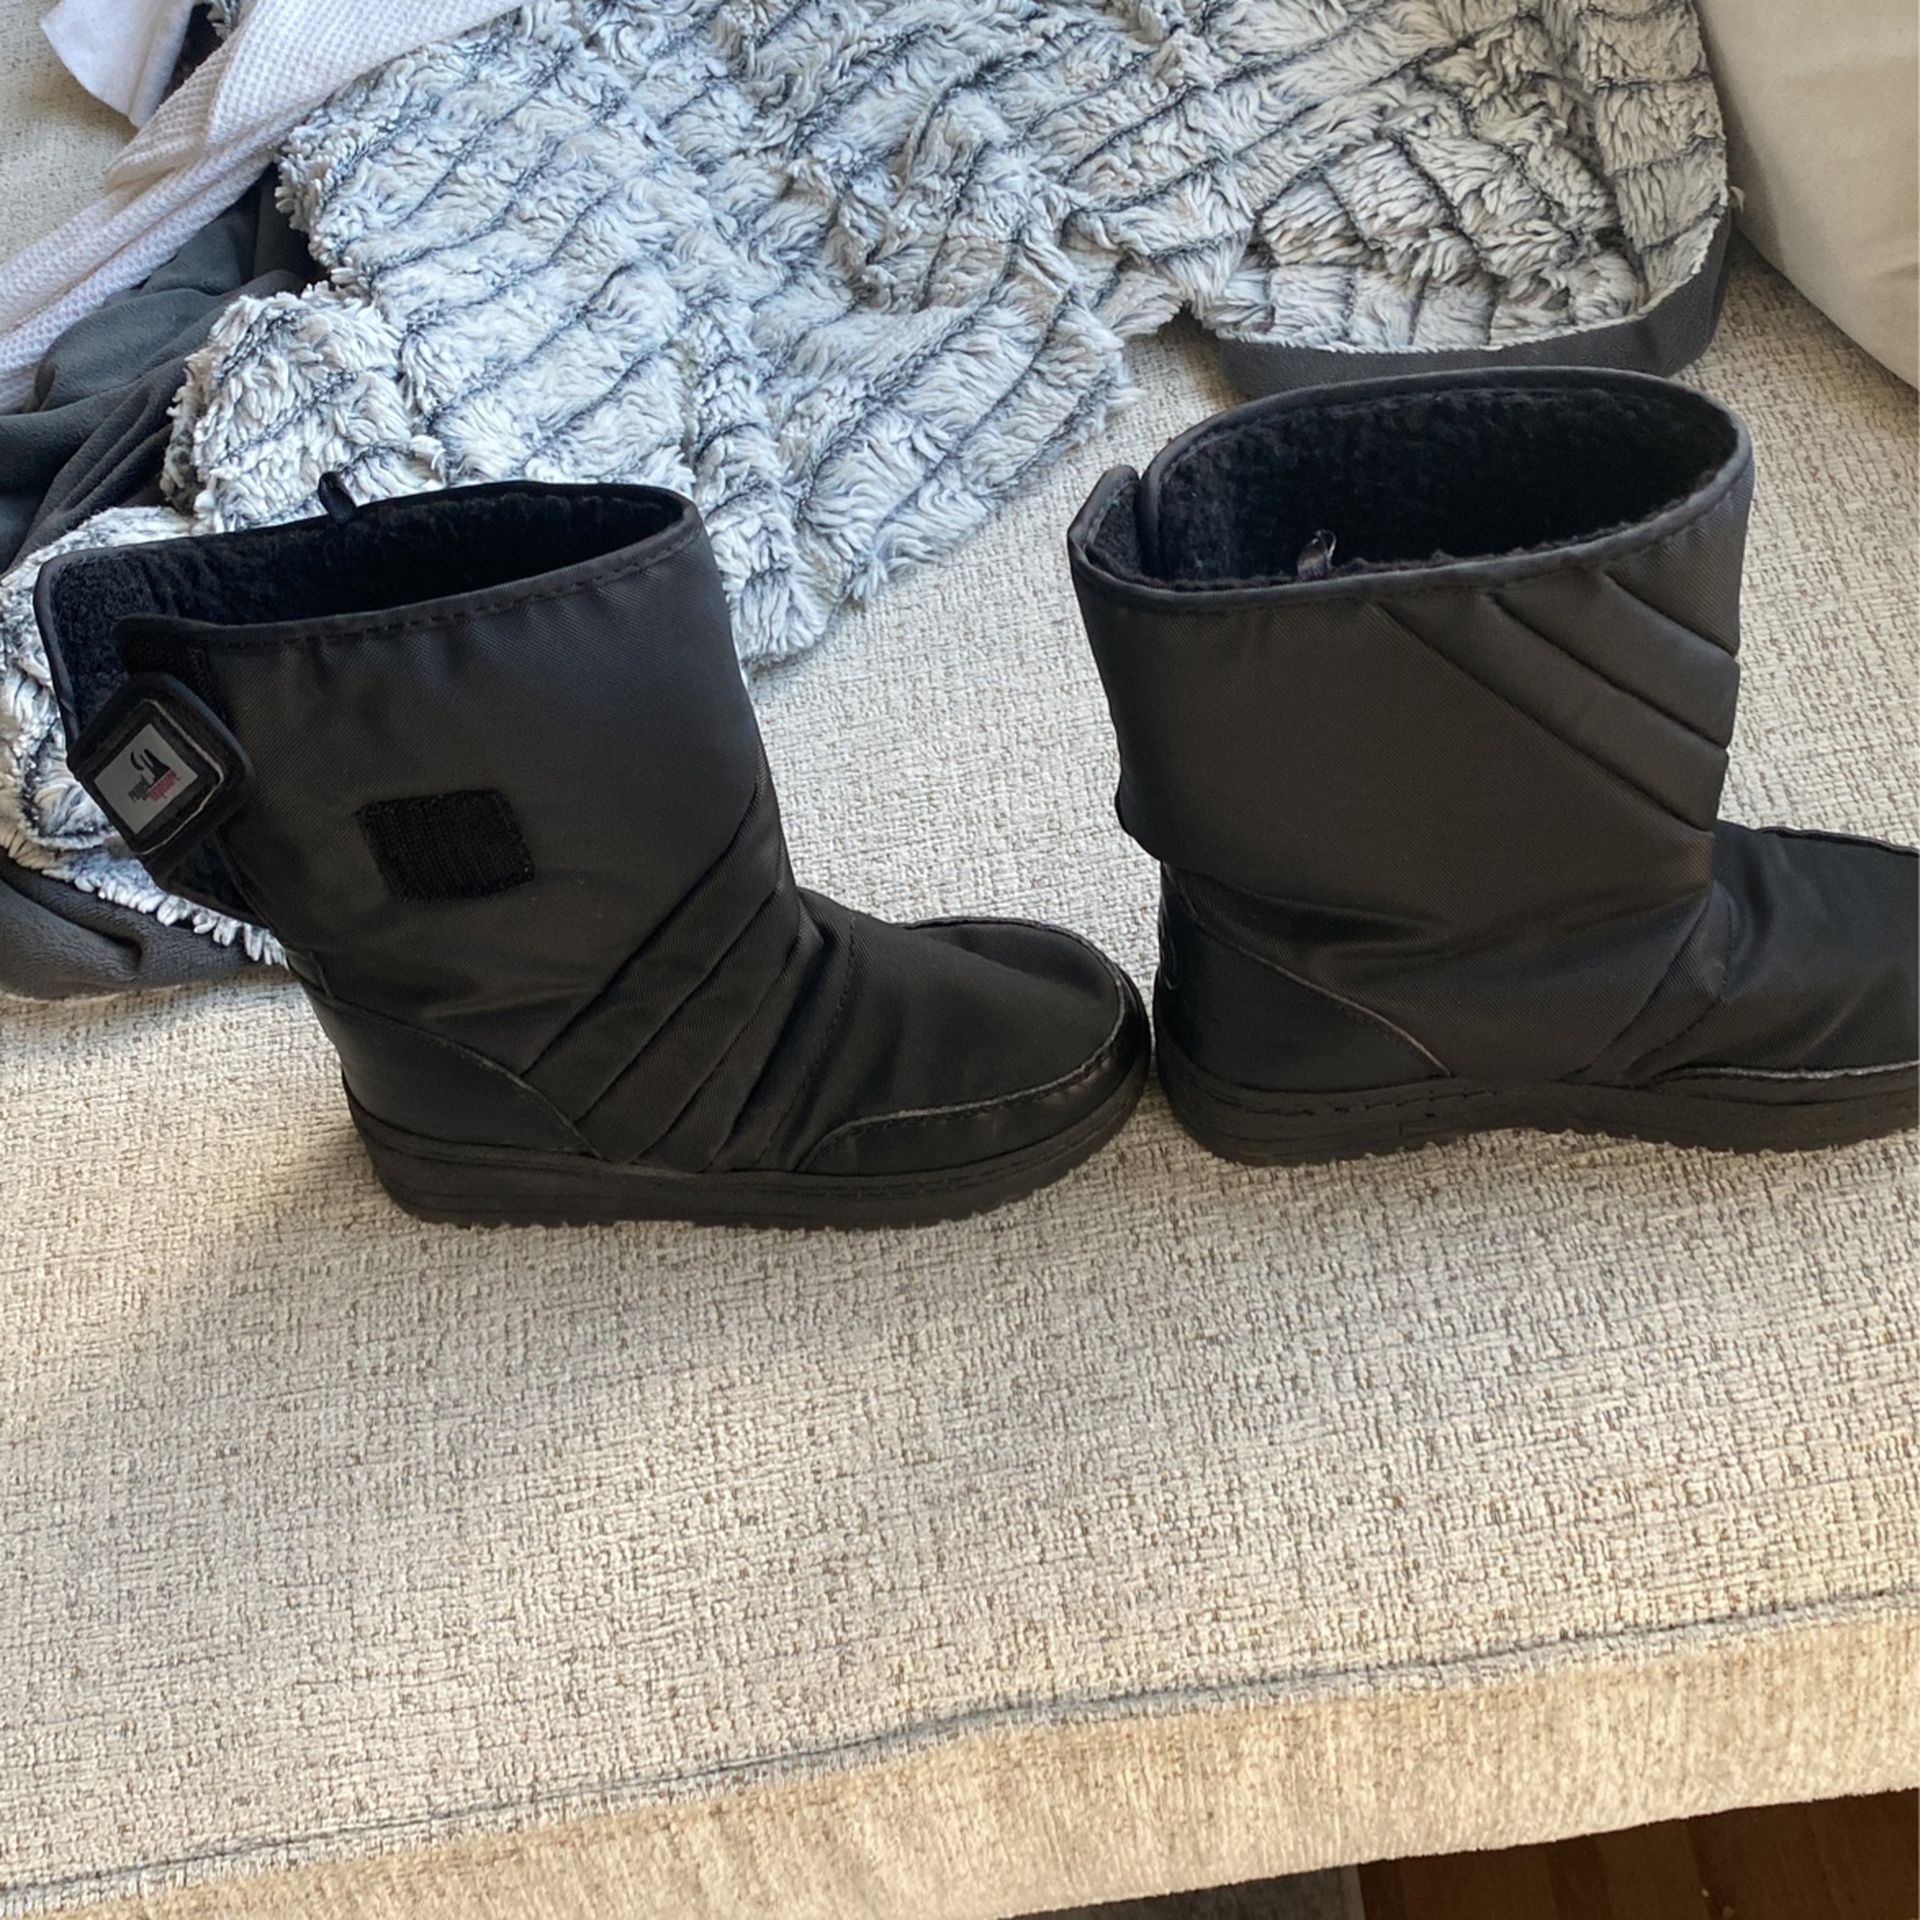 Kids Size 2 Snow Boots